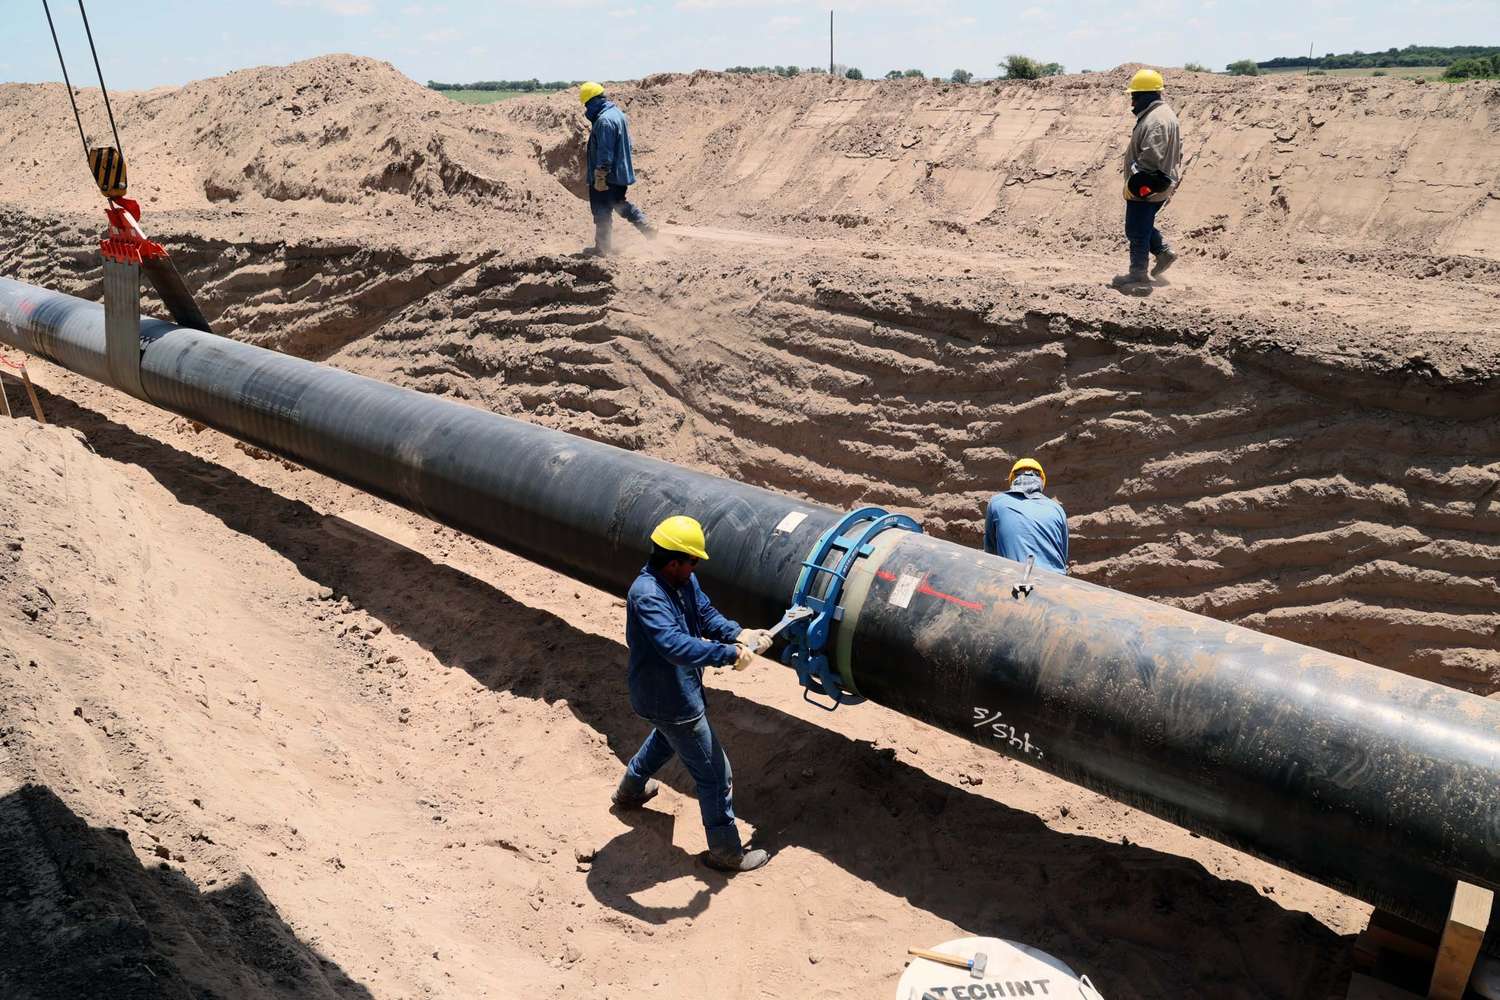 El Gasoducto Néstor Kirchner comenzó a inyectar gas a la red troncal de transporte